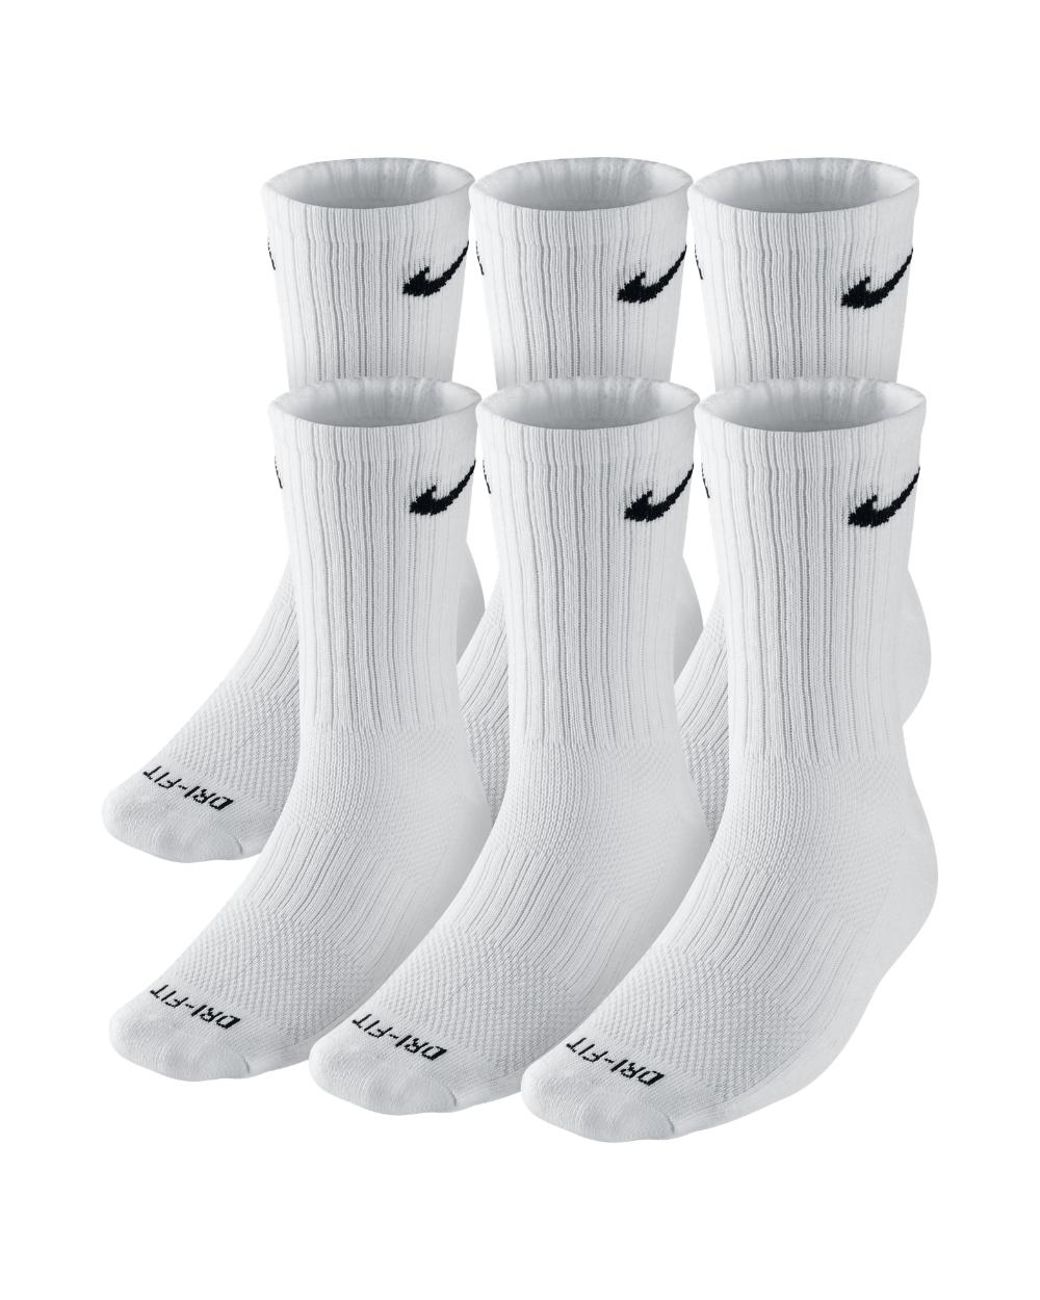 Lyst - Nike Dri-fit Cushion Crew Training Socks (large/6 Pair) in White ...